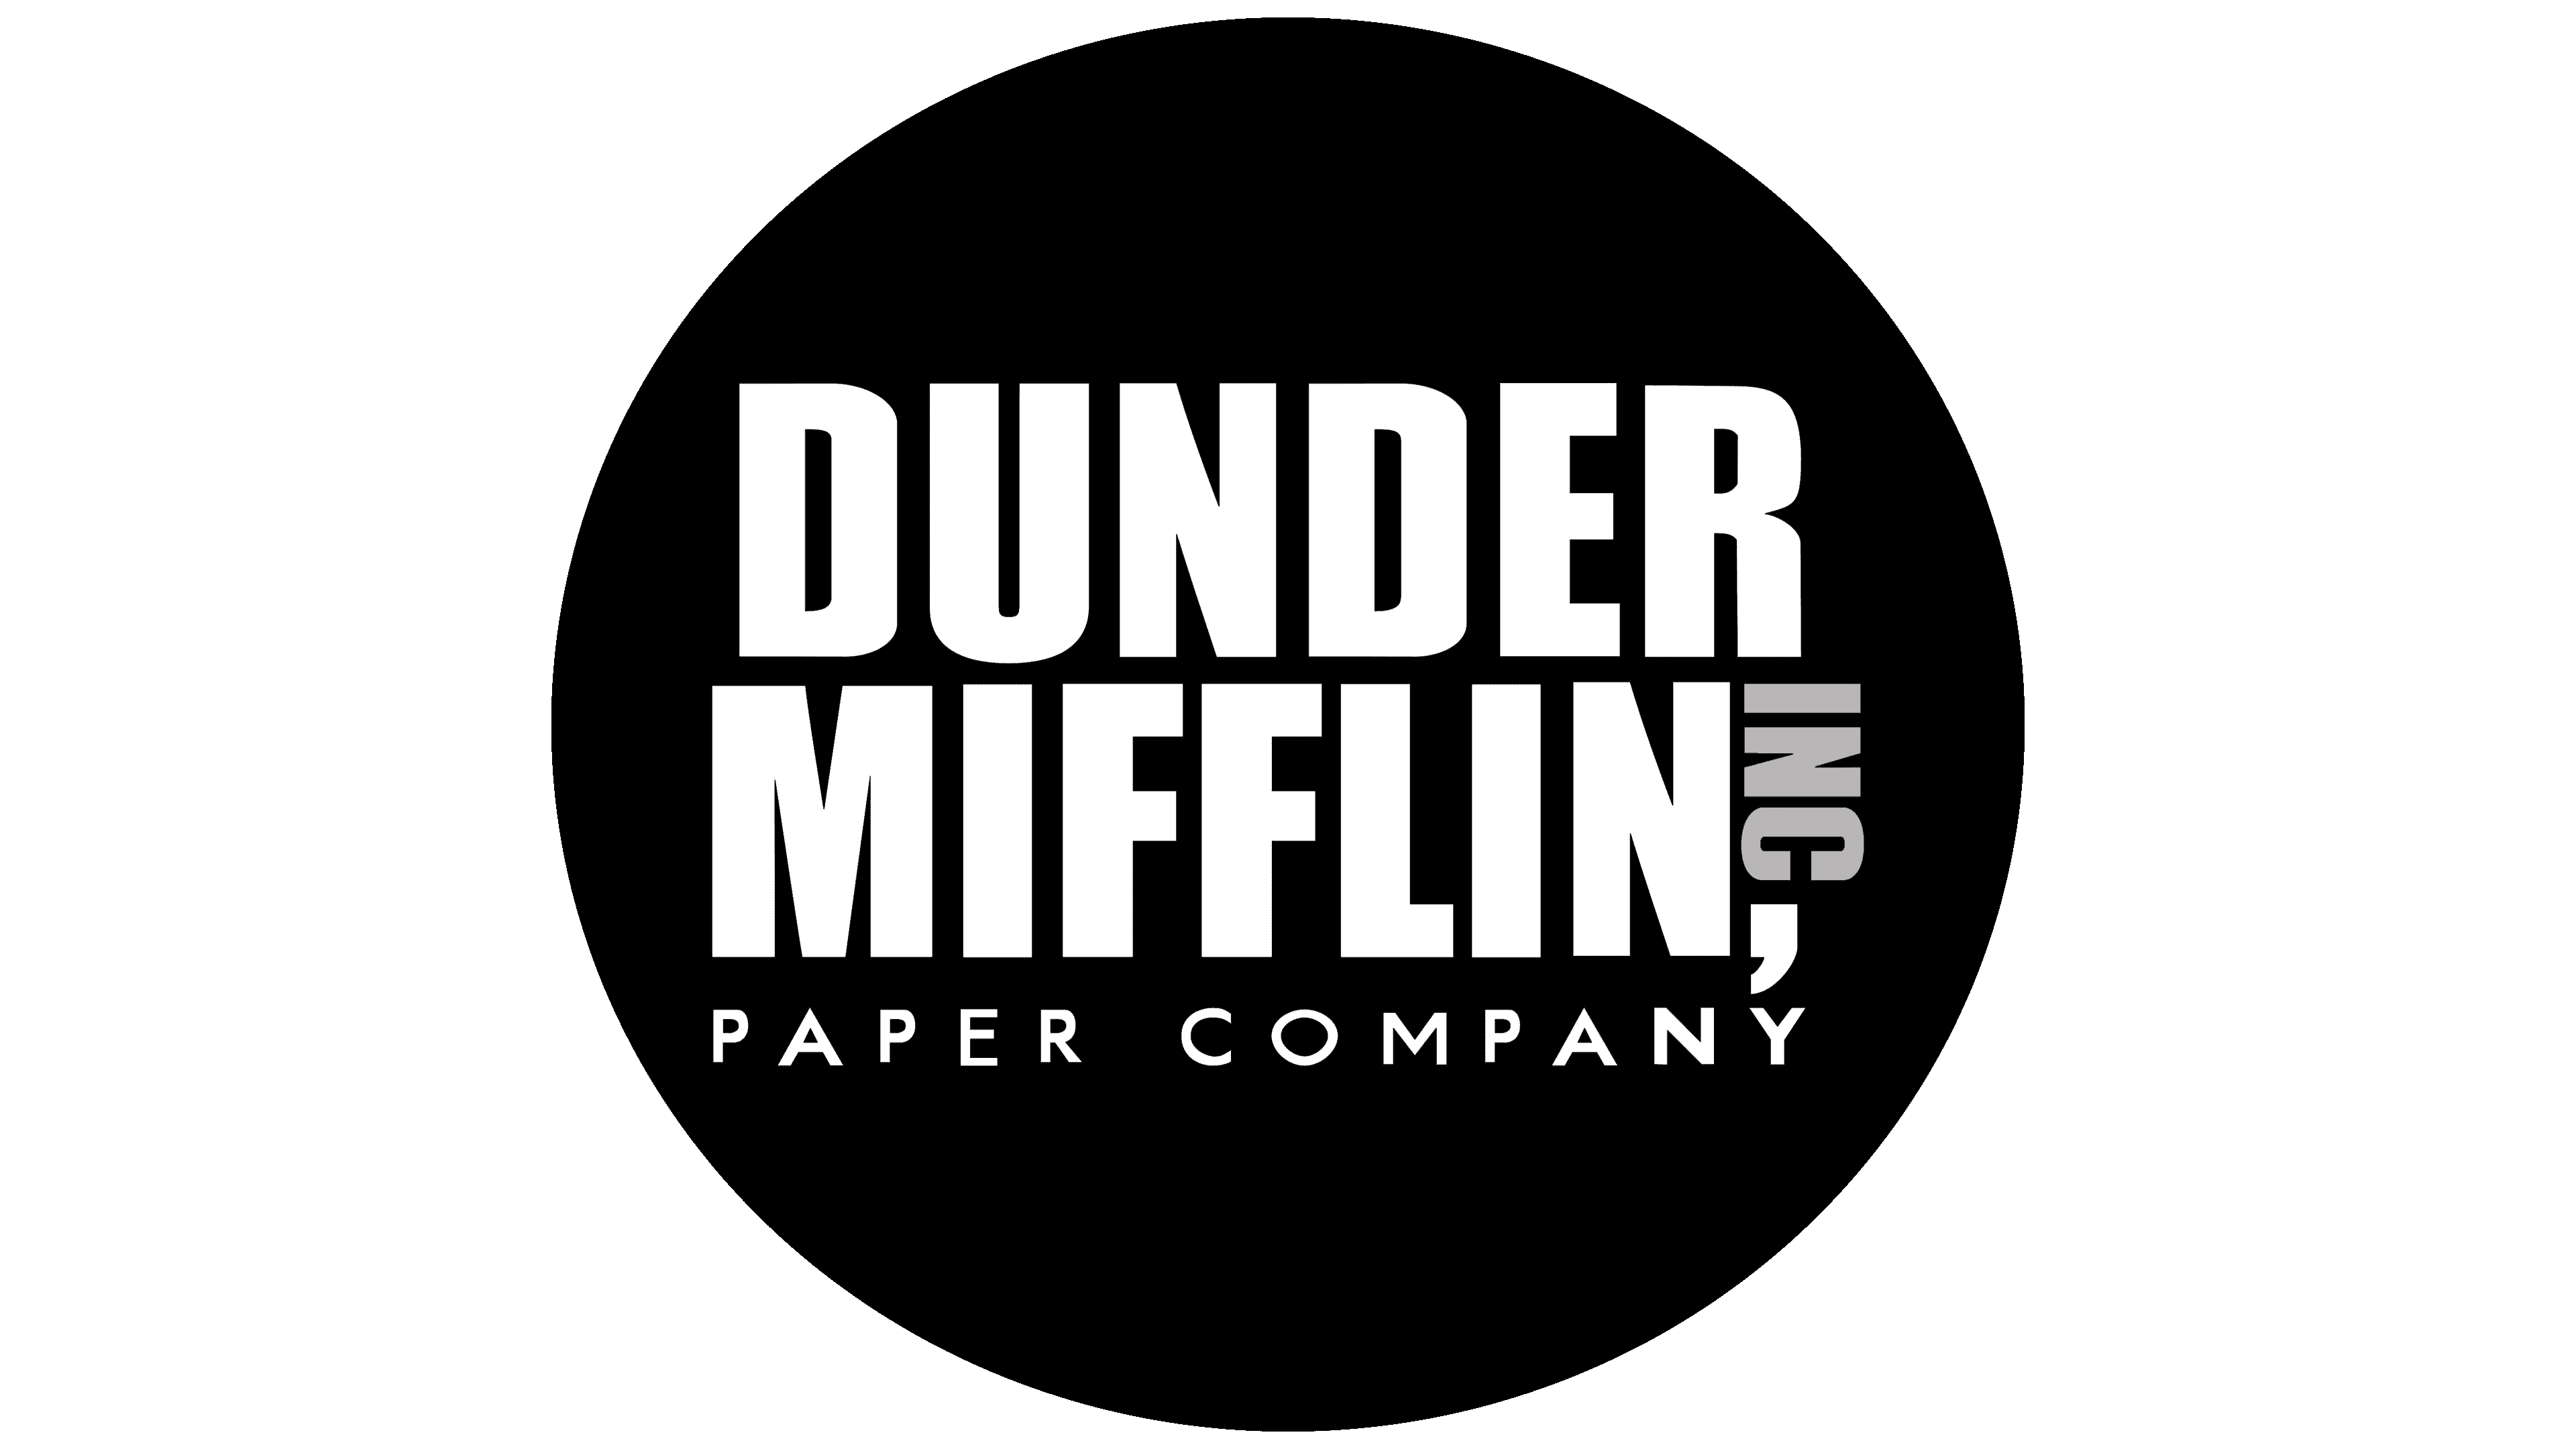 Dunder Mifflin logo by Mayur LS on Dribbble